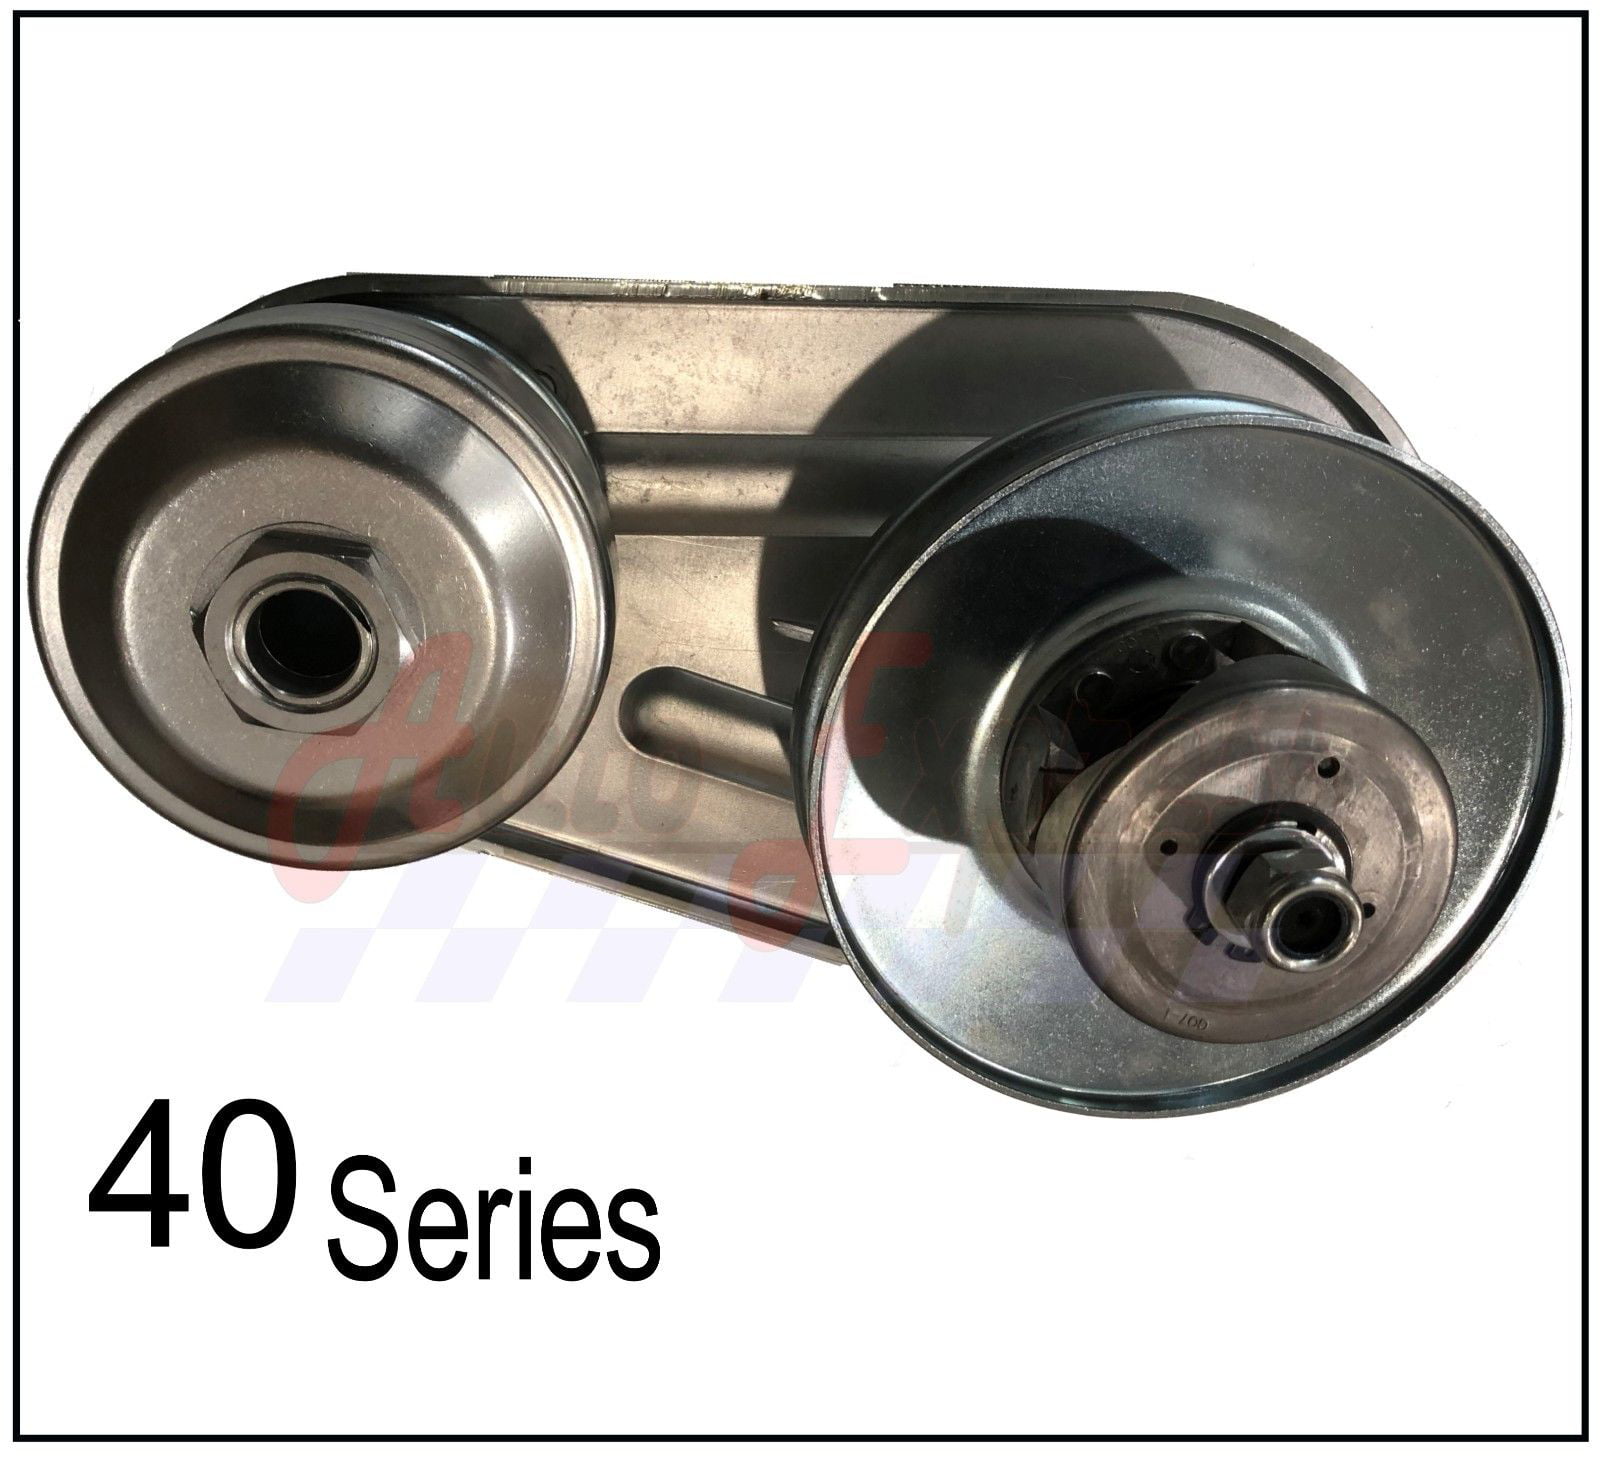 40 Series Clutch Pulley 209151 203015 Fit 9-16HP Go Kart Torque Converter Kit